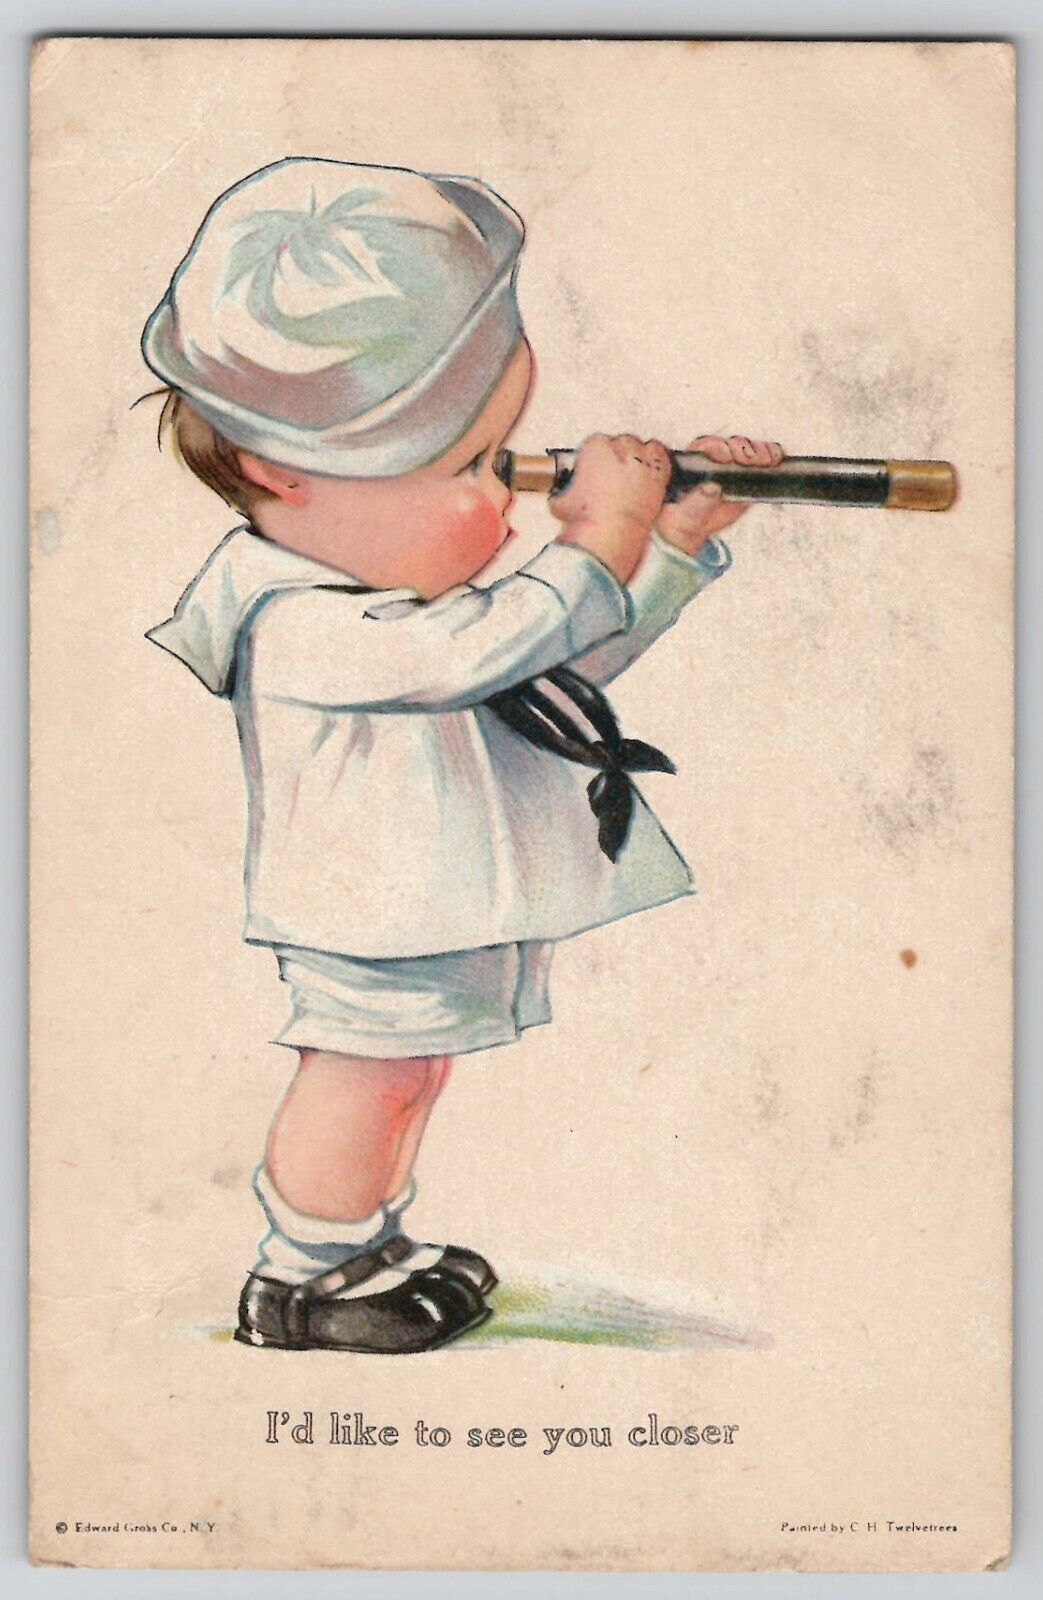 Baby Sailor Boy Spyglass Twelvetrees Humor Postcard 1921 See You Closer 135